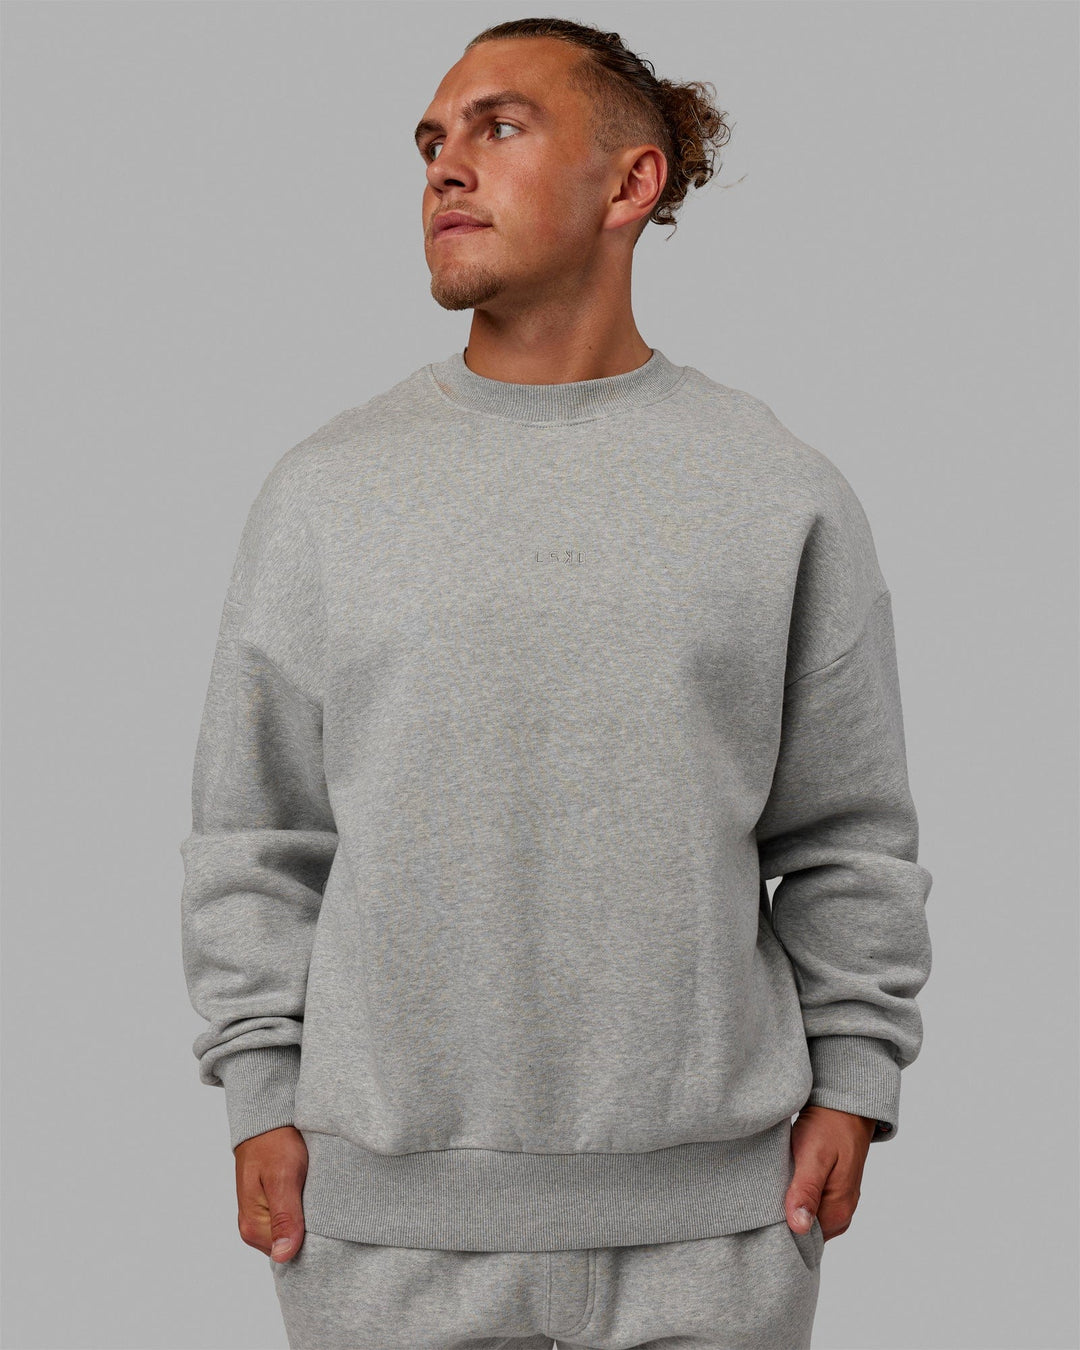 Man wearing Unisex MVP Sweater Oversize - Light Grey Marl